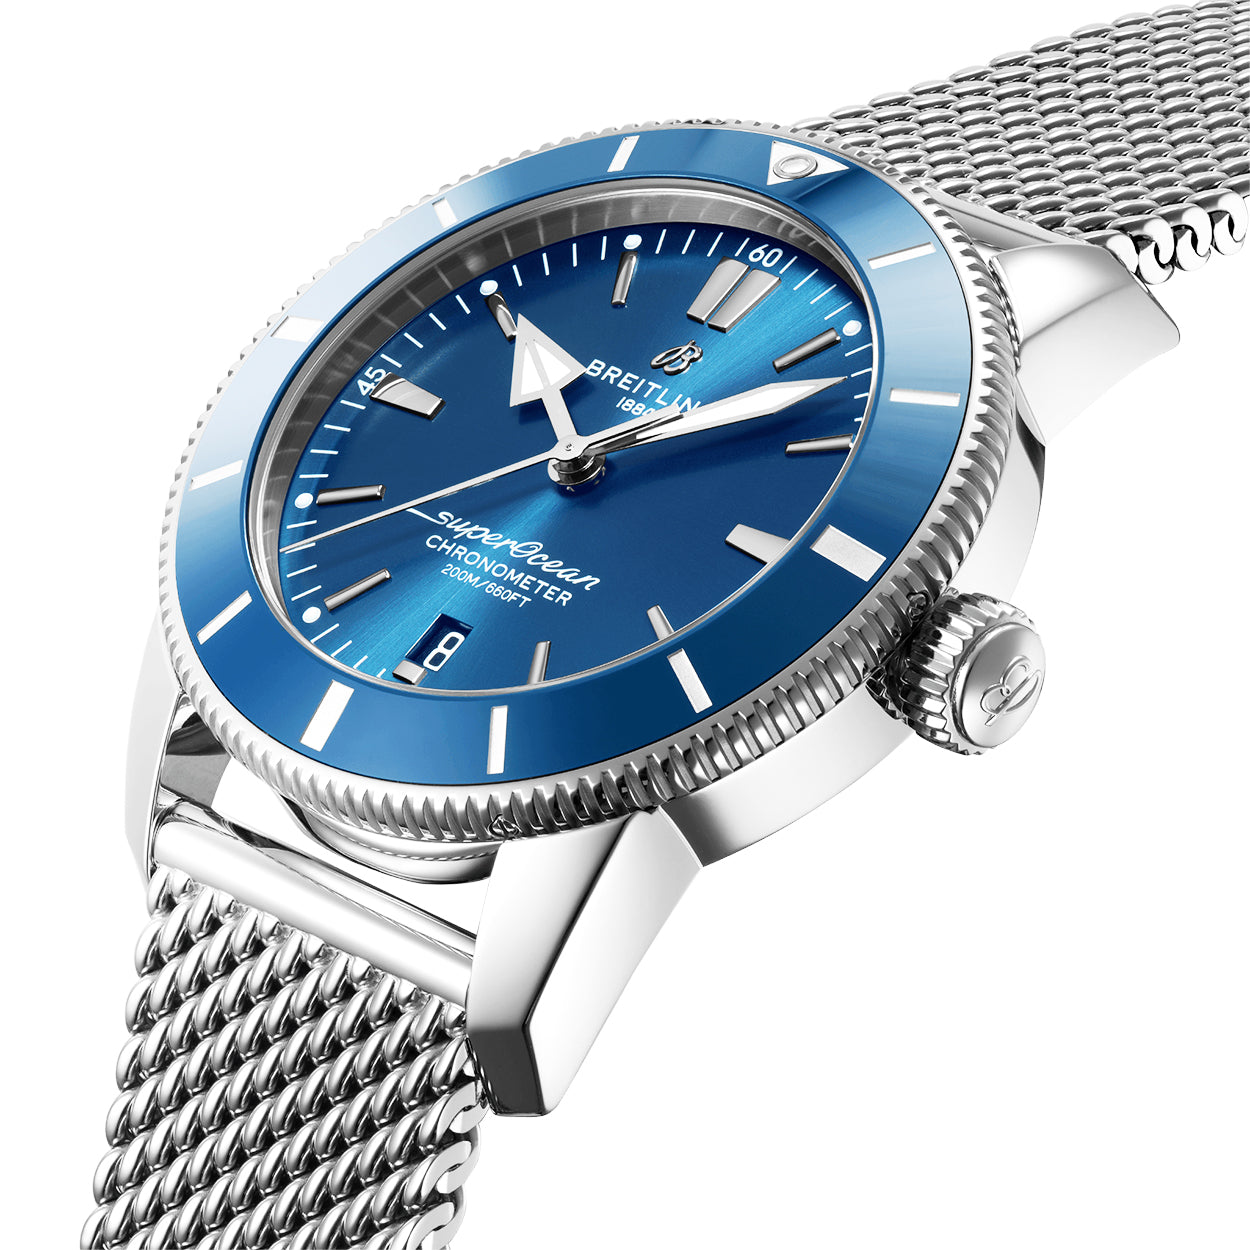 Superocean Heritage II 44mm Blue Dial Automatic Bracelet Watch